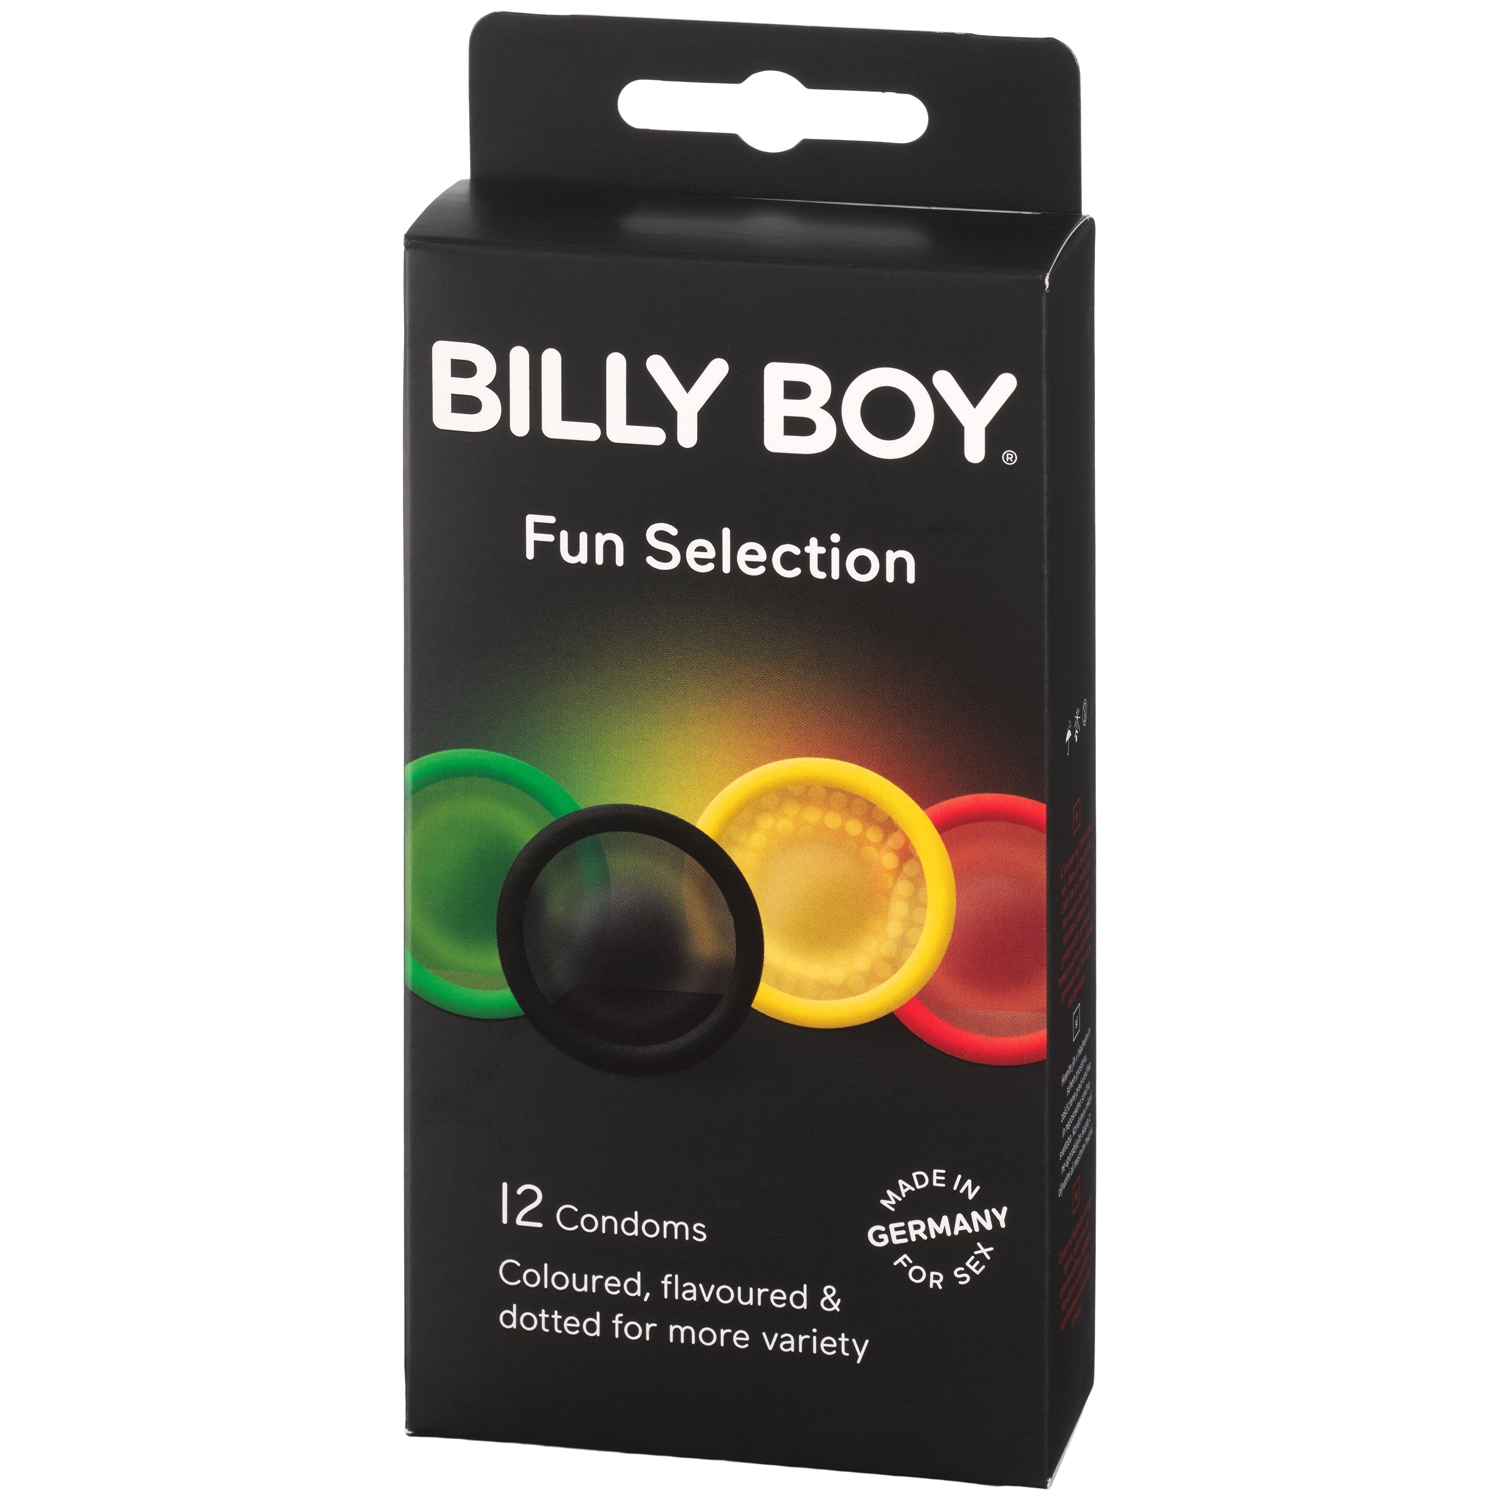 22768-billy-boy-fun-selection-kondomer-12-stk_01_product